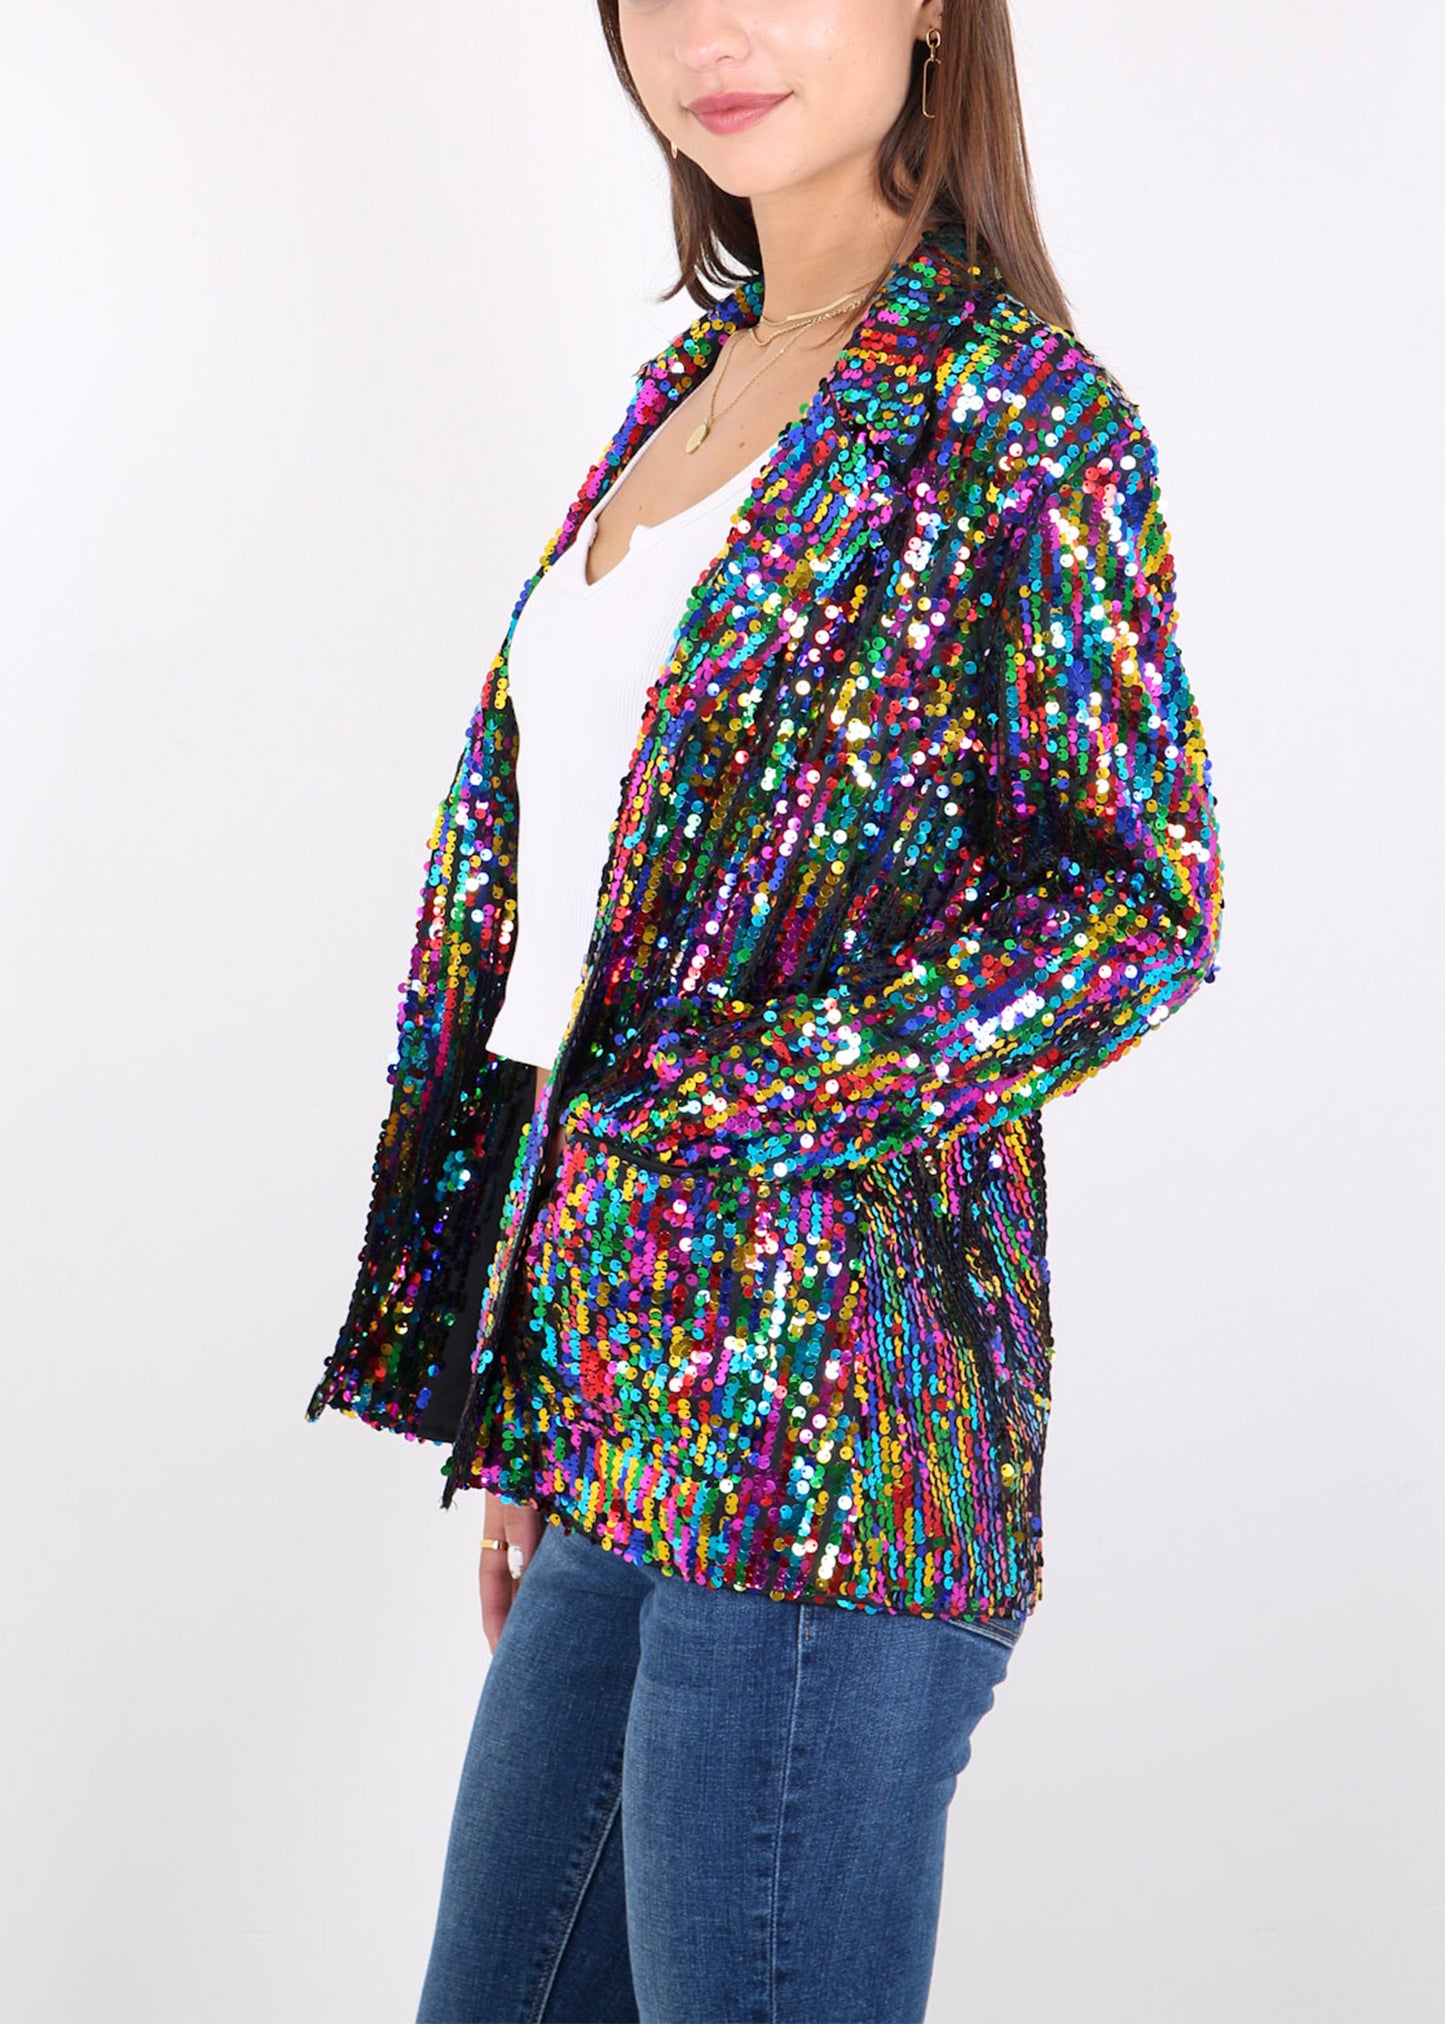 Anna-Kaci Women's Sequin Jackets Long Sleeve Open Front Glitter Sparkle Party Blazer Jacket